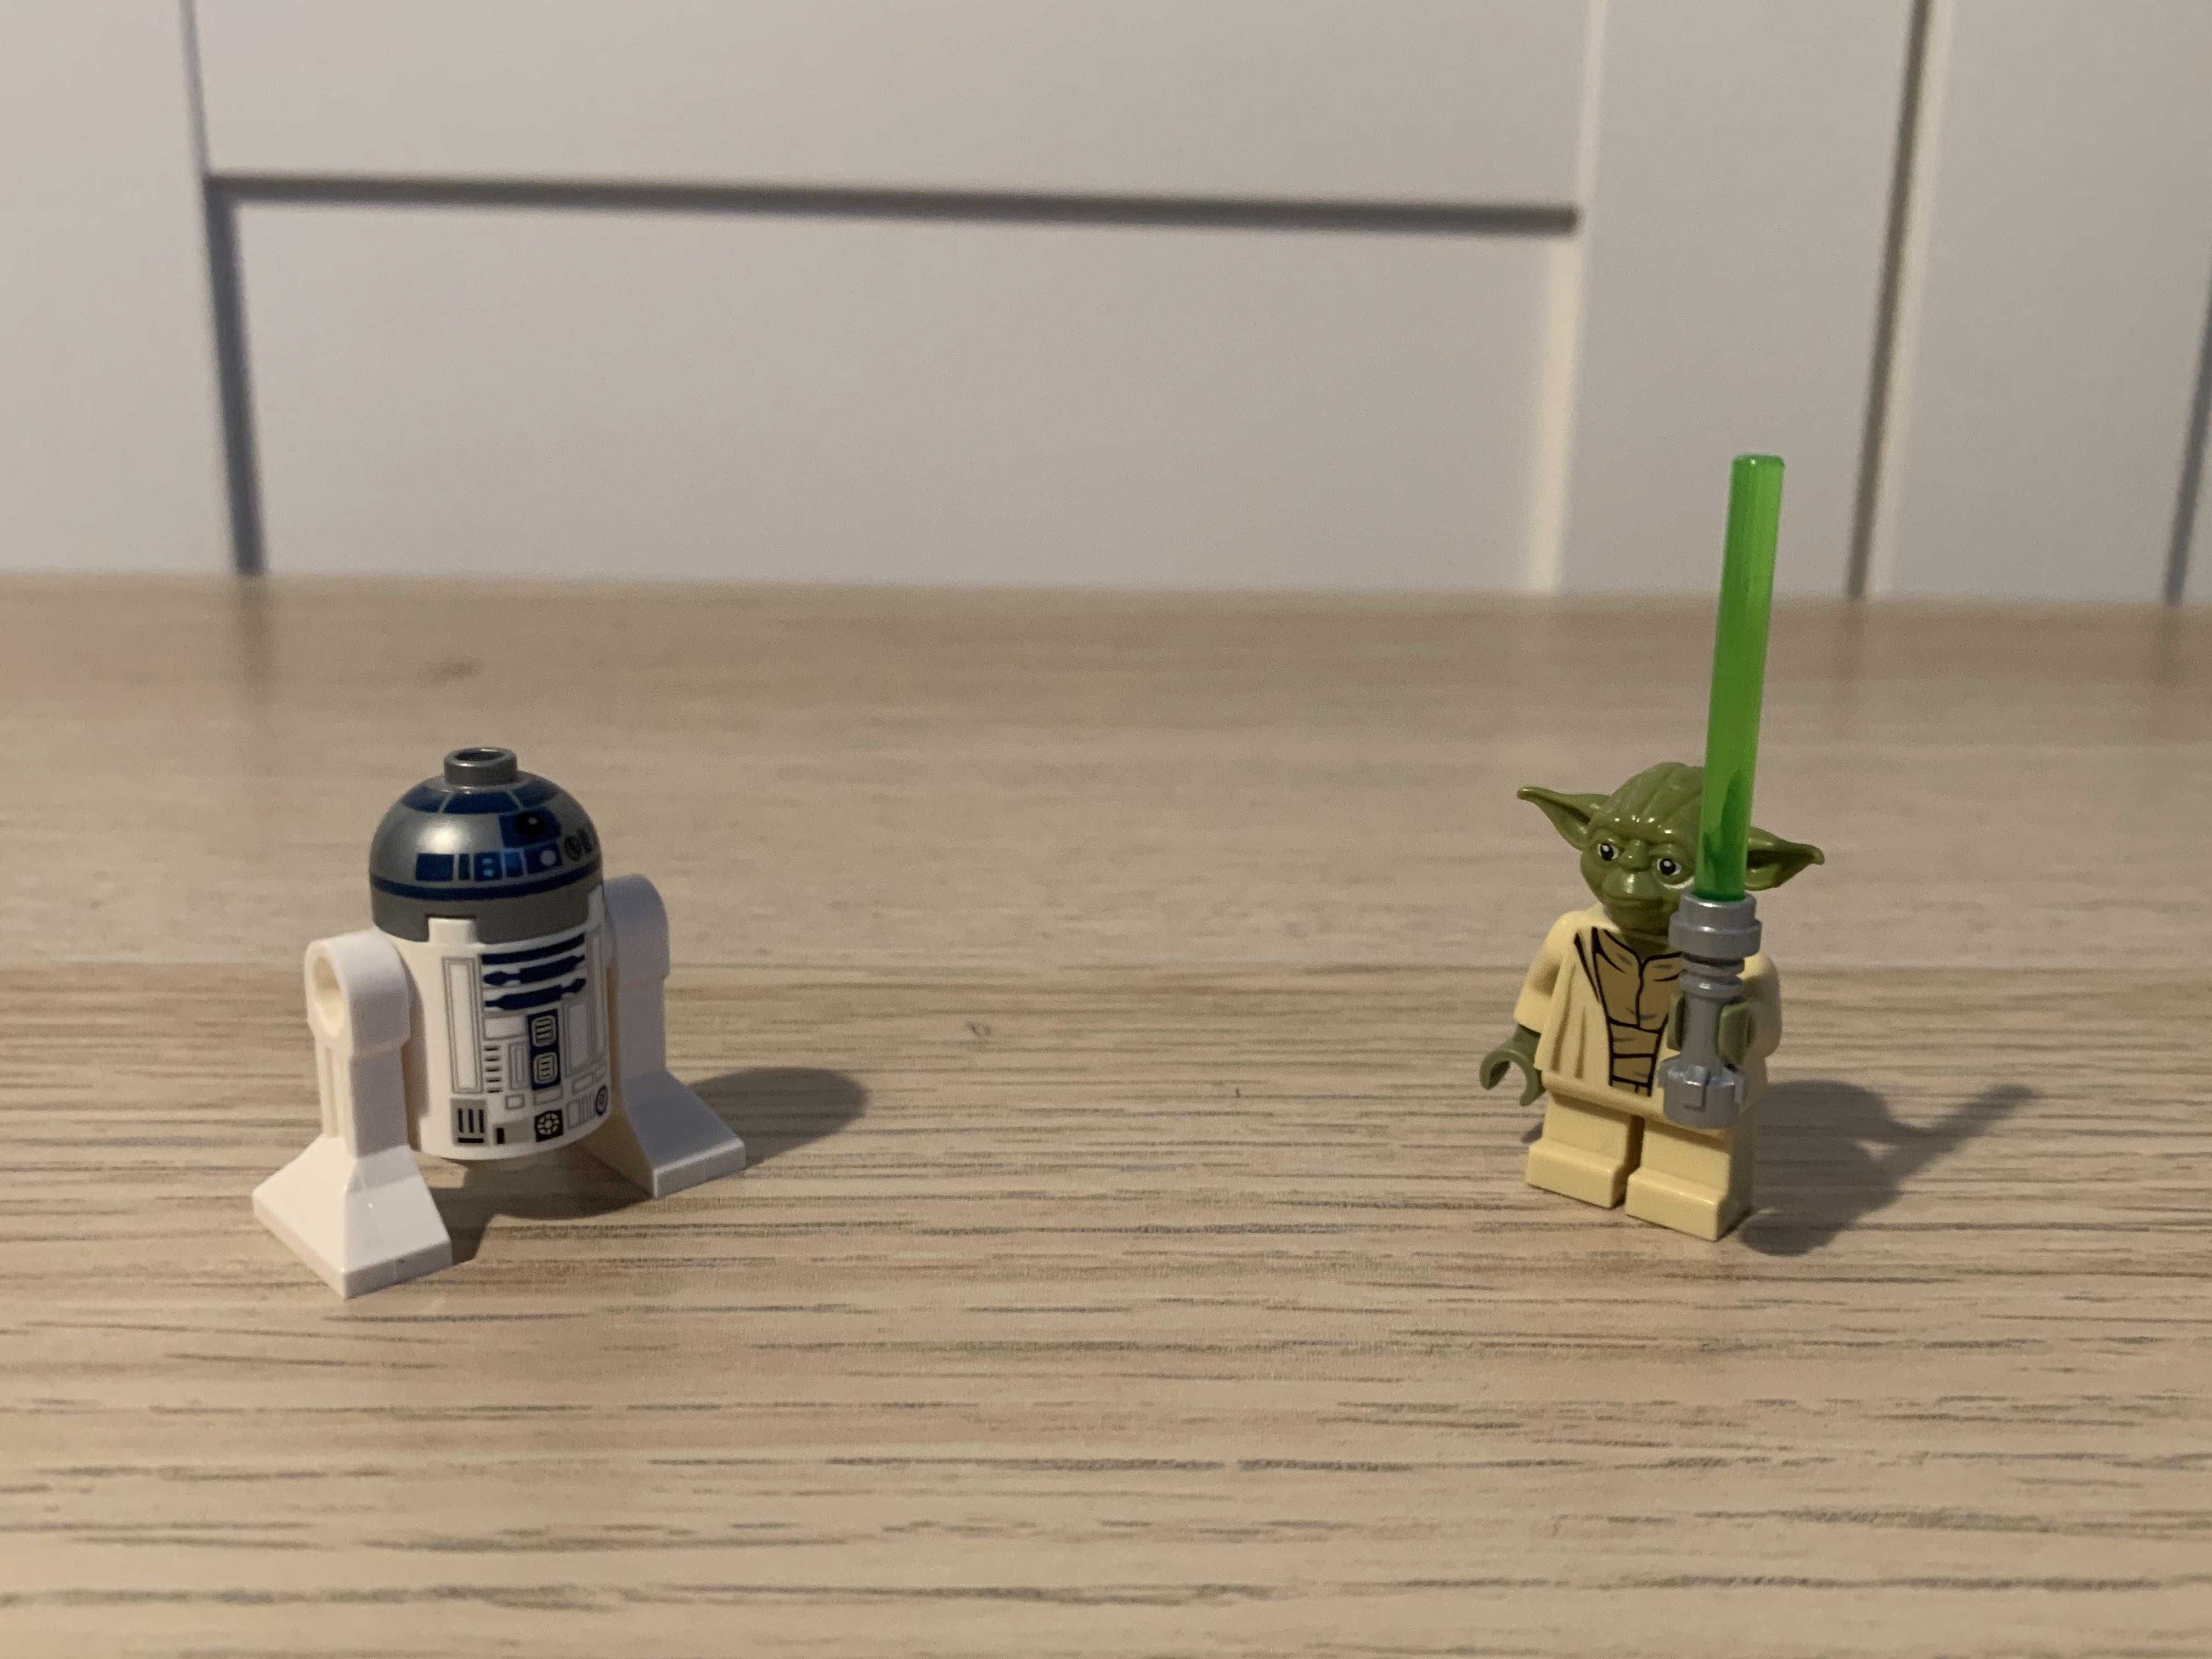 Lego Star Wars 75168 Jedi Starfighter Yody